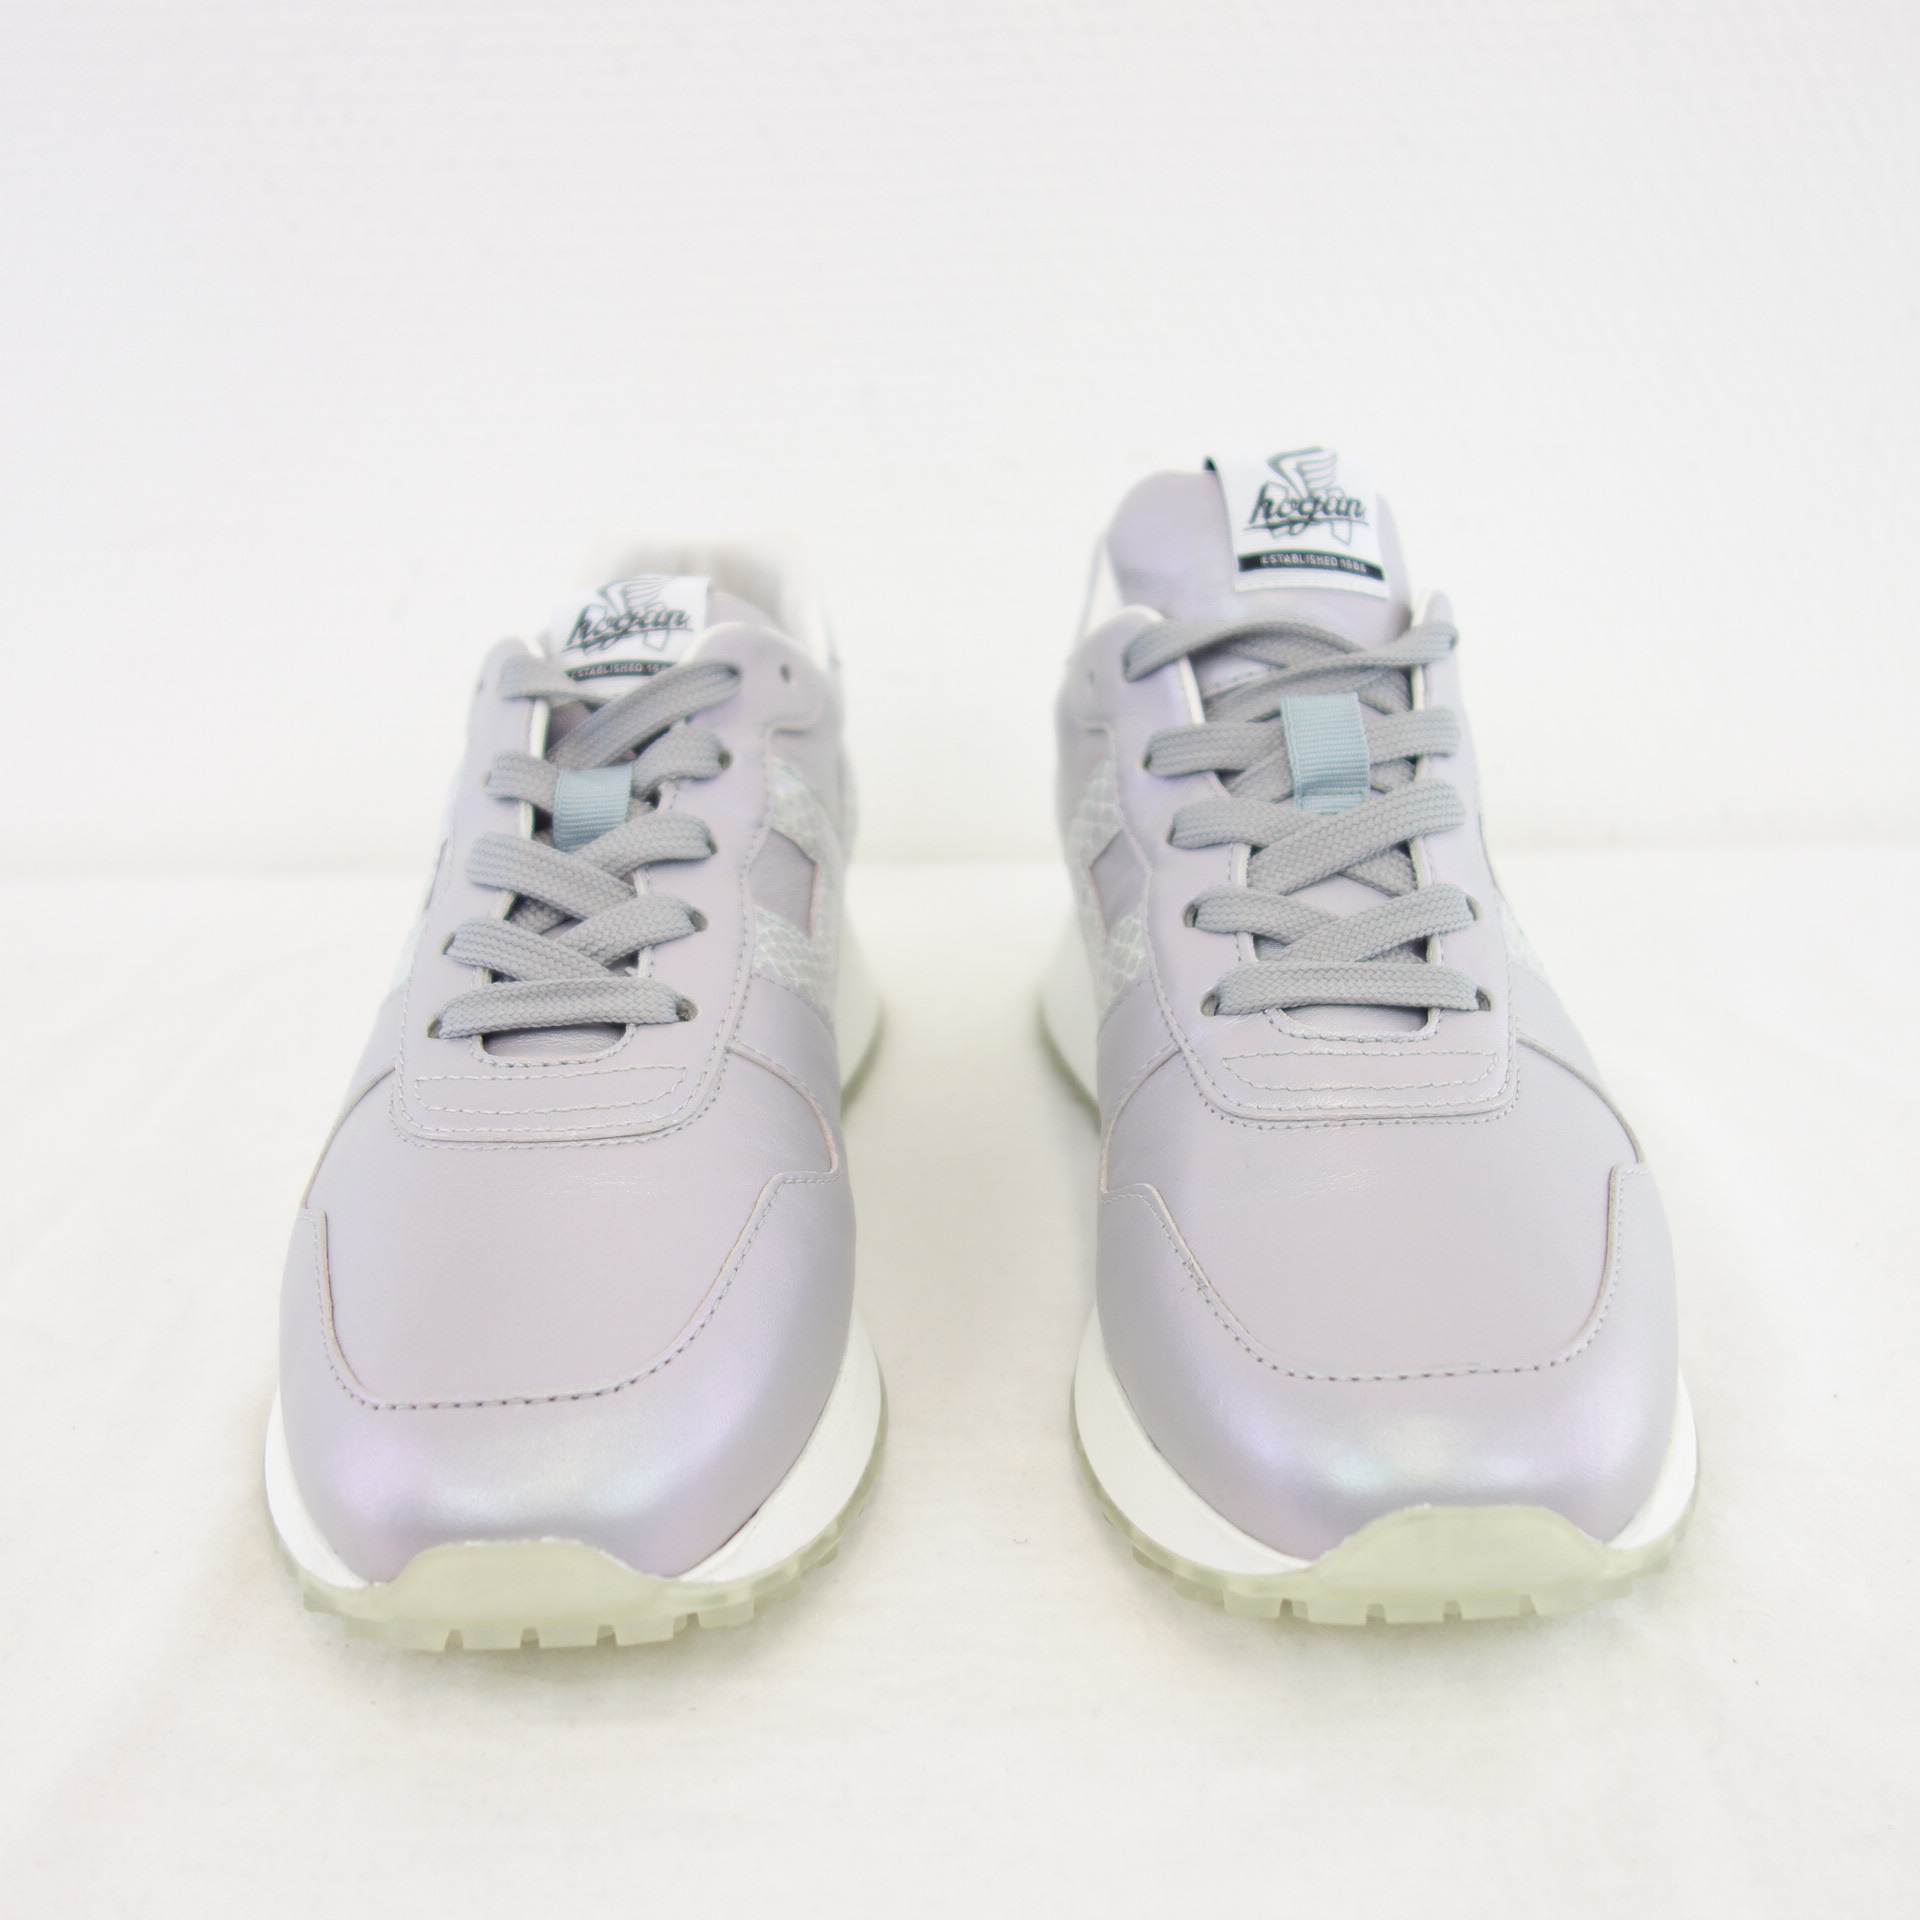 HOGAN Damen Schuhe Sportschuhe Sneaker Leder Metallic Grau Lavendel Modell H86RUN